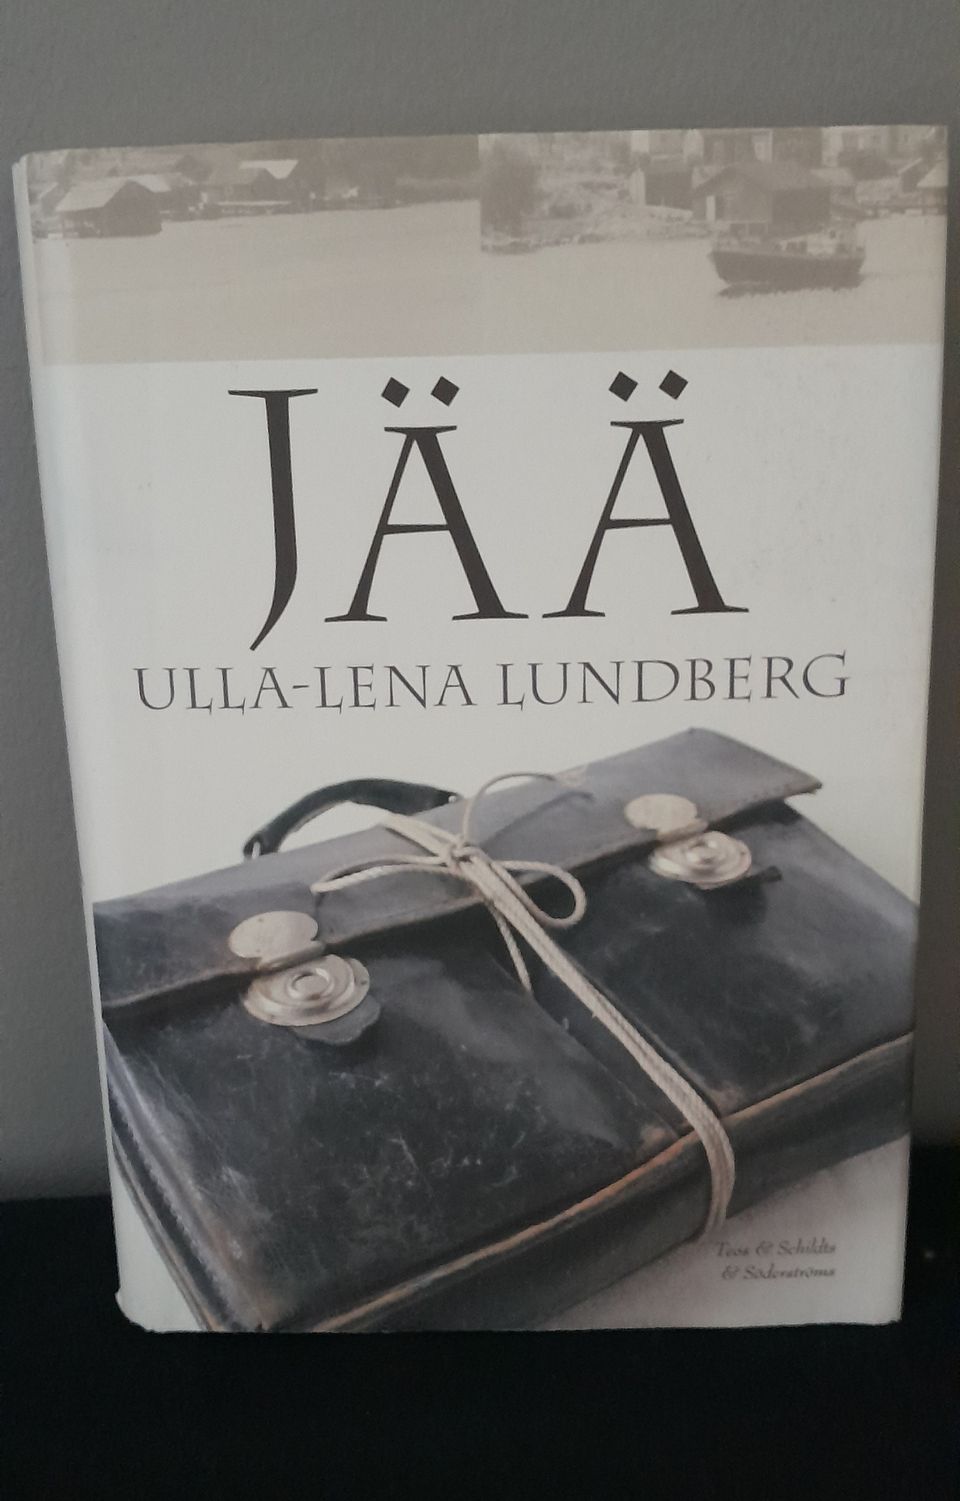 Ulla-Lena Lundberg - Jää